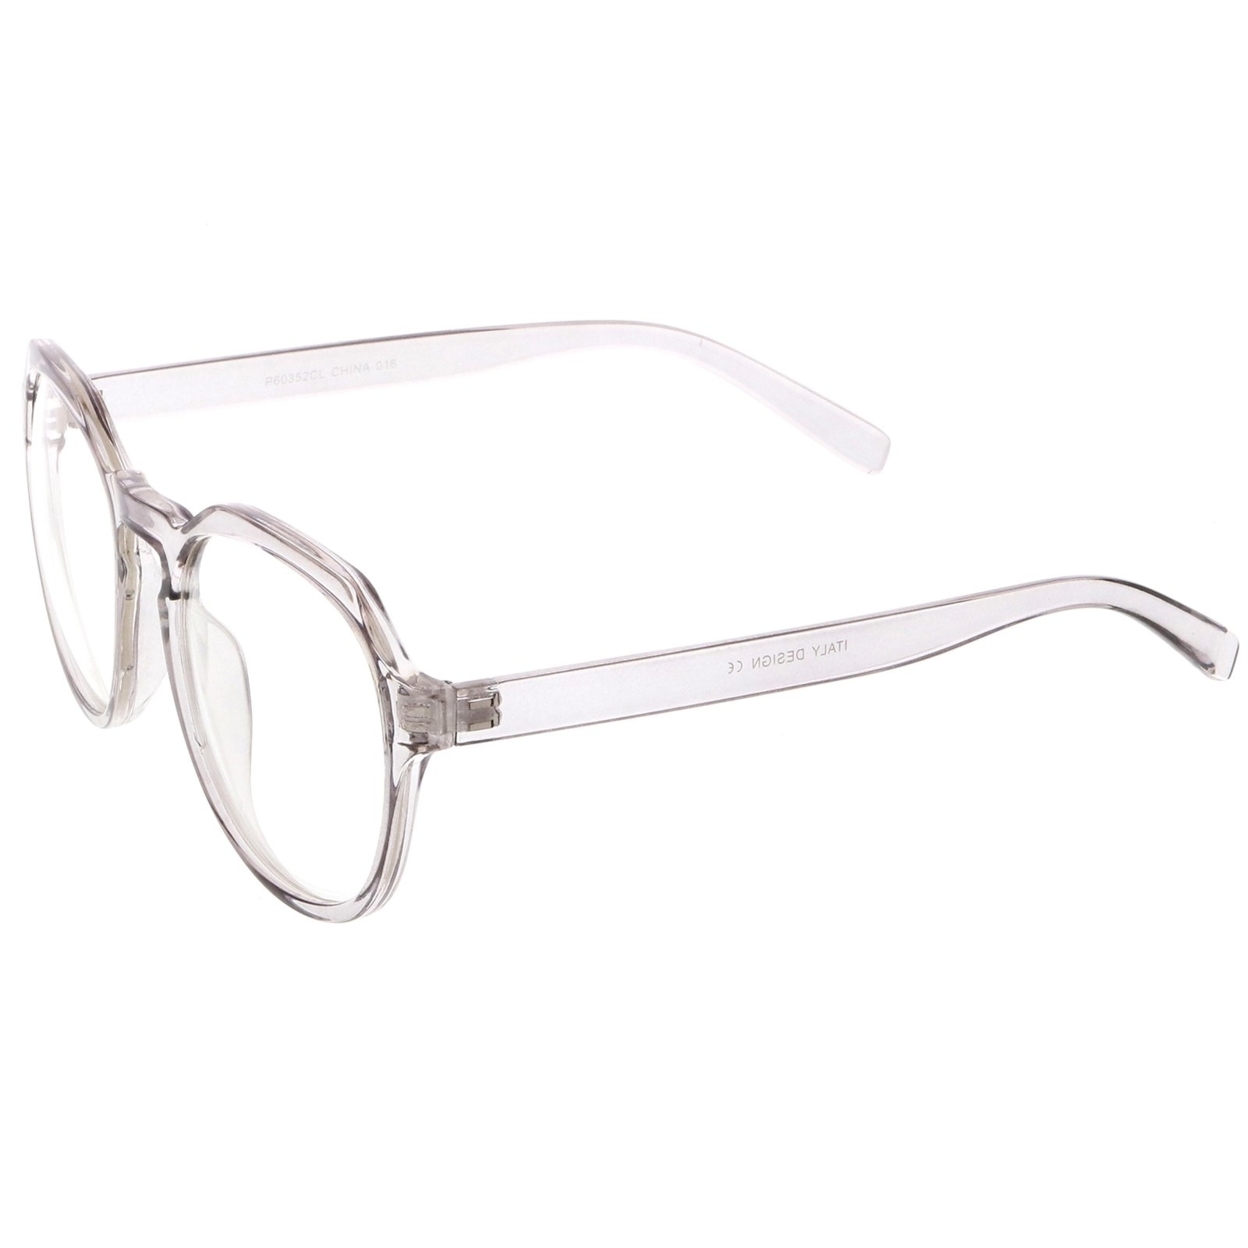 Modern Keyhole Nose Bridge Clear Lens Round Eyeglasses 55mm - Black / Clear